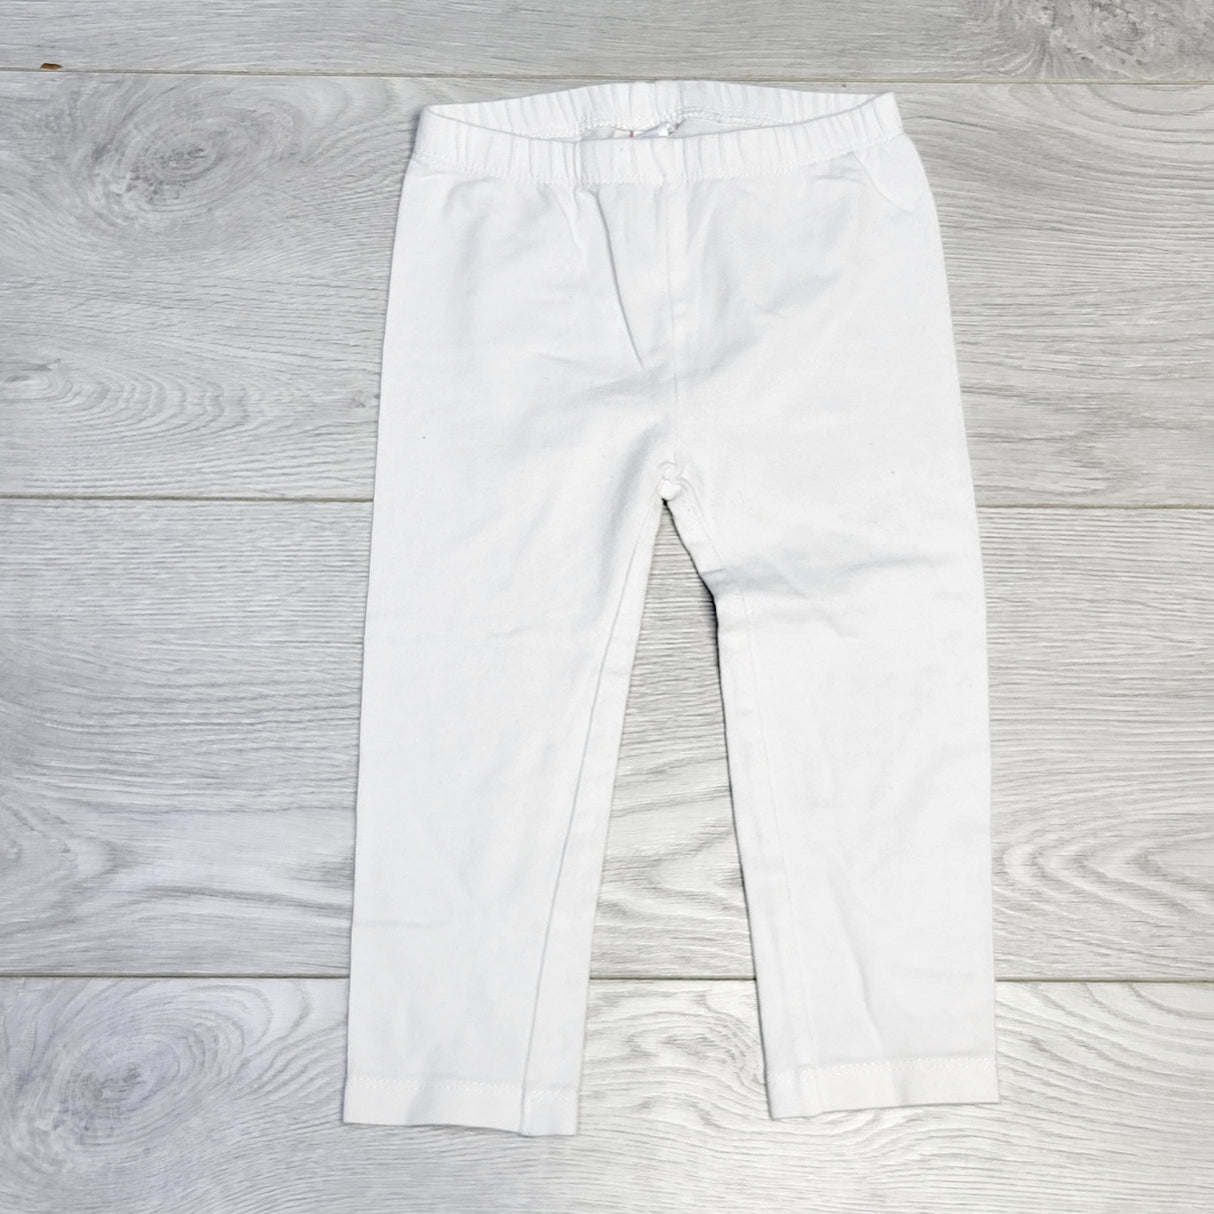 GDM1 - White cotton legging, 24 months